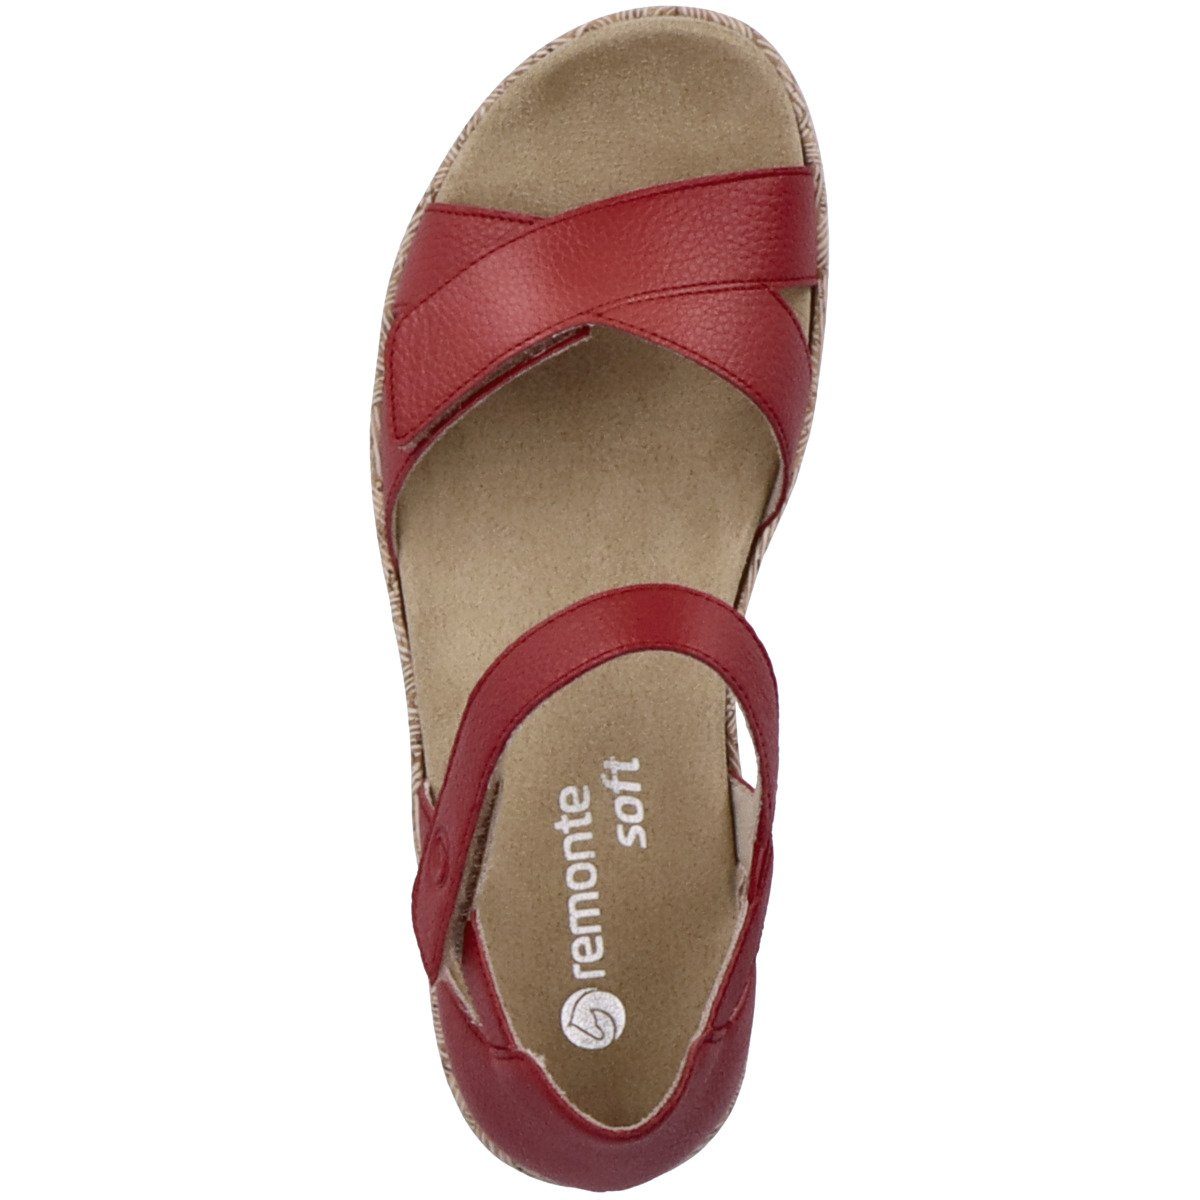 Sandale Merkmale Damen keine R6859 rot besonderen Remonte